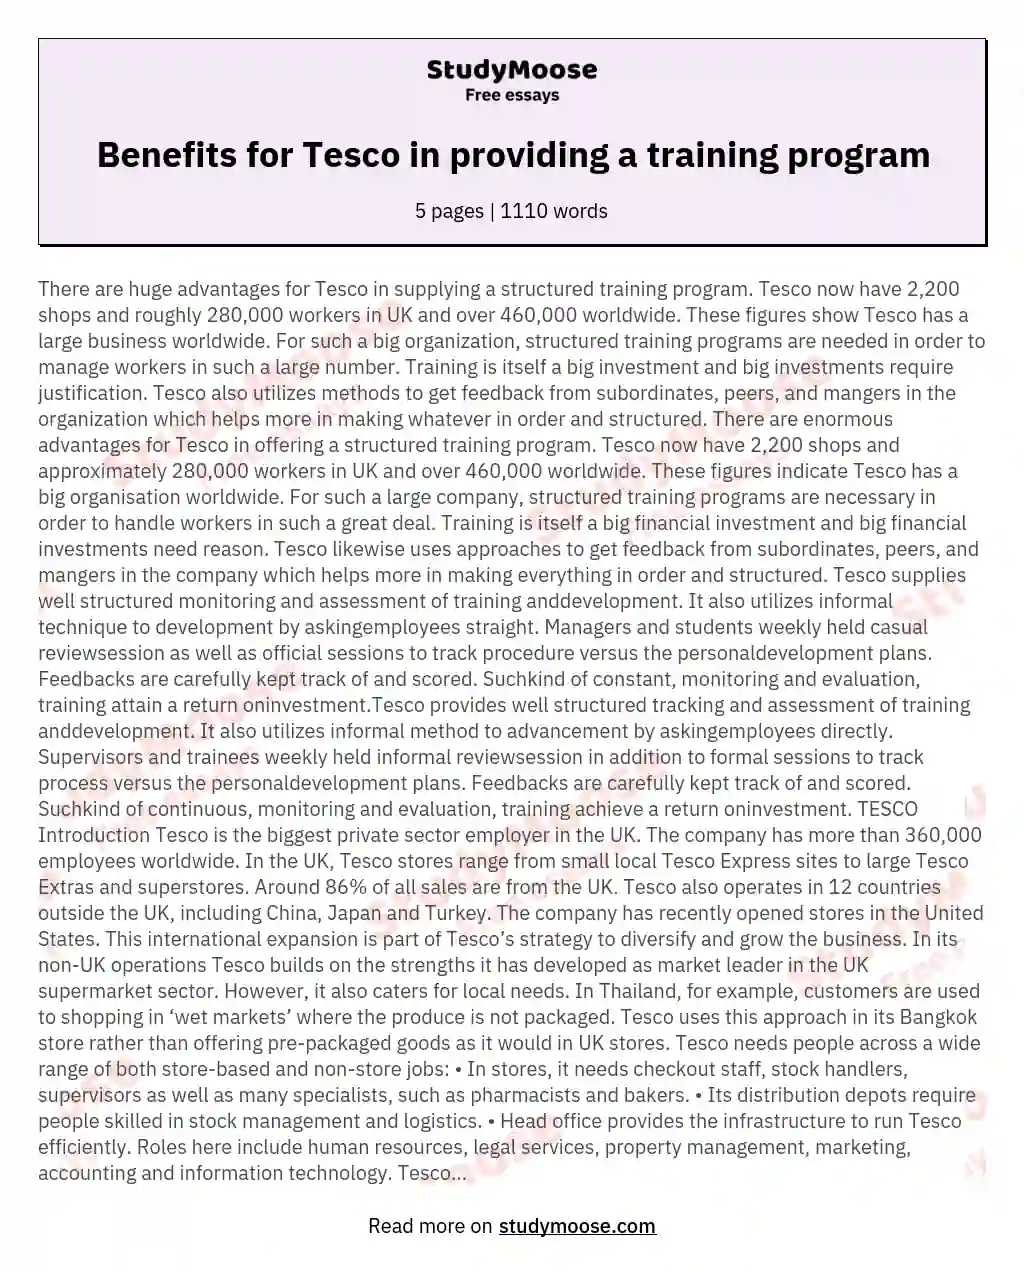 Benefits for Tesco in providing a training program essay